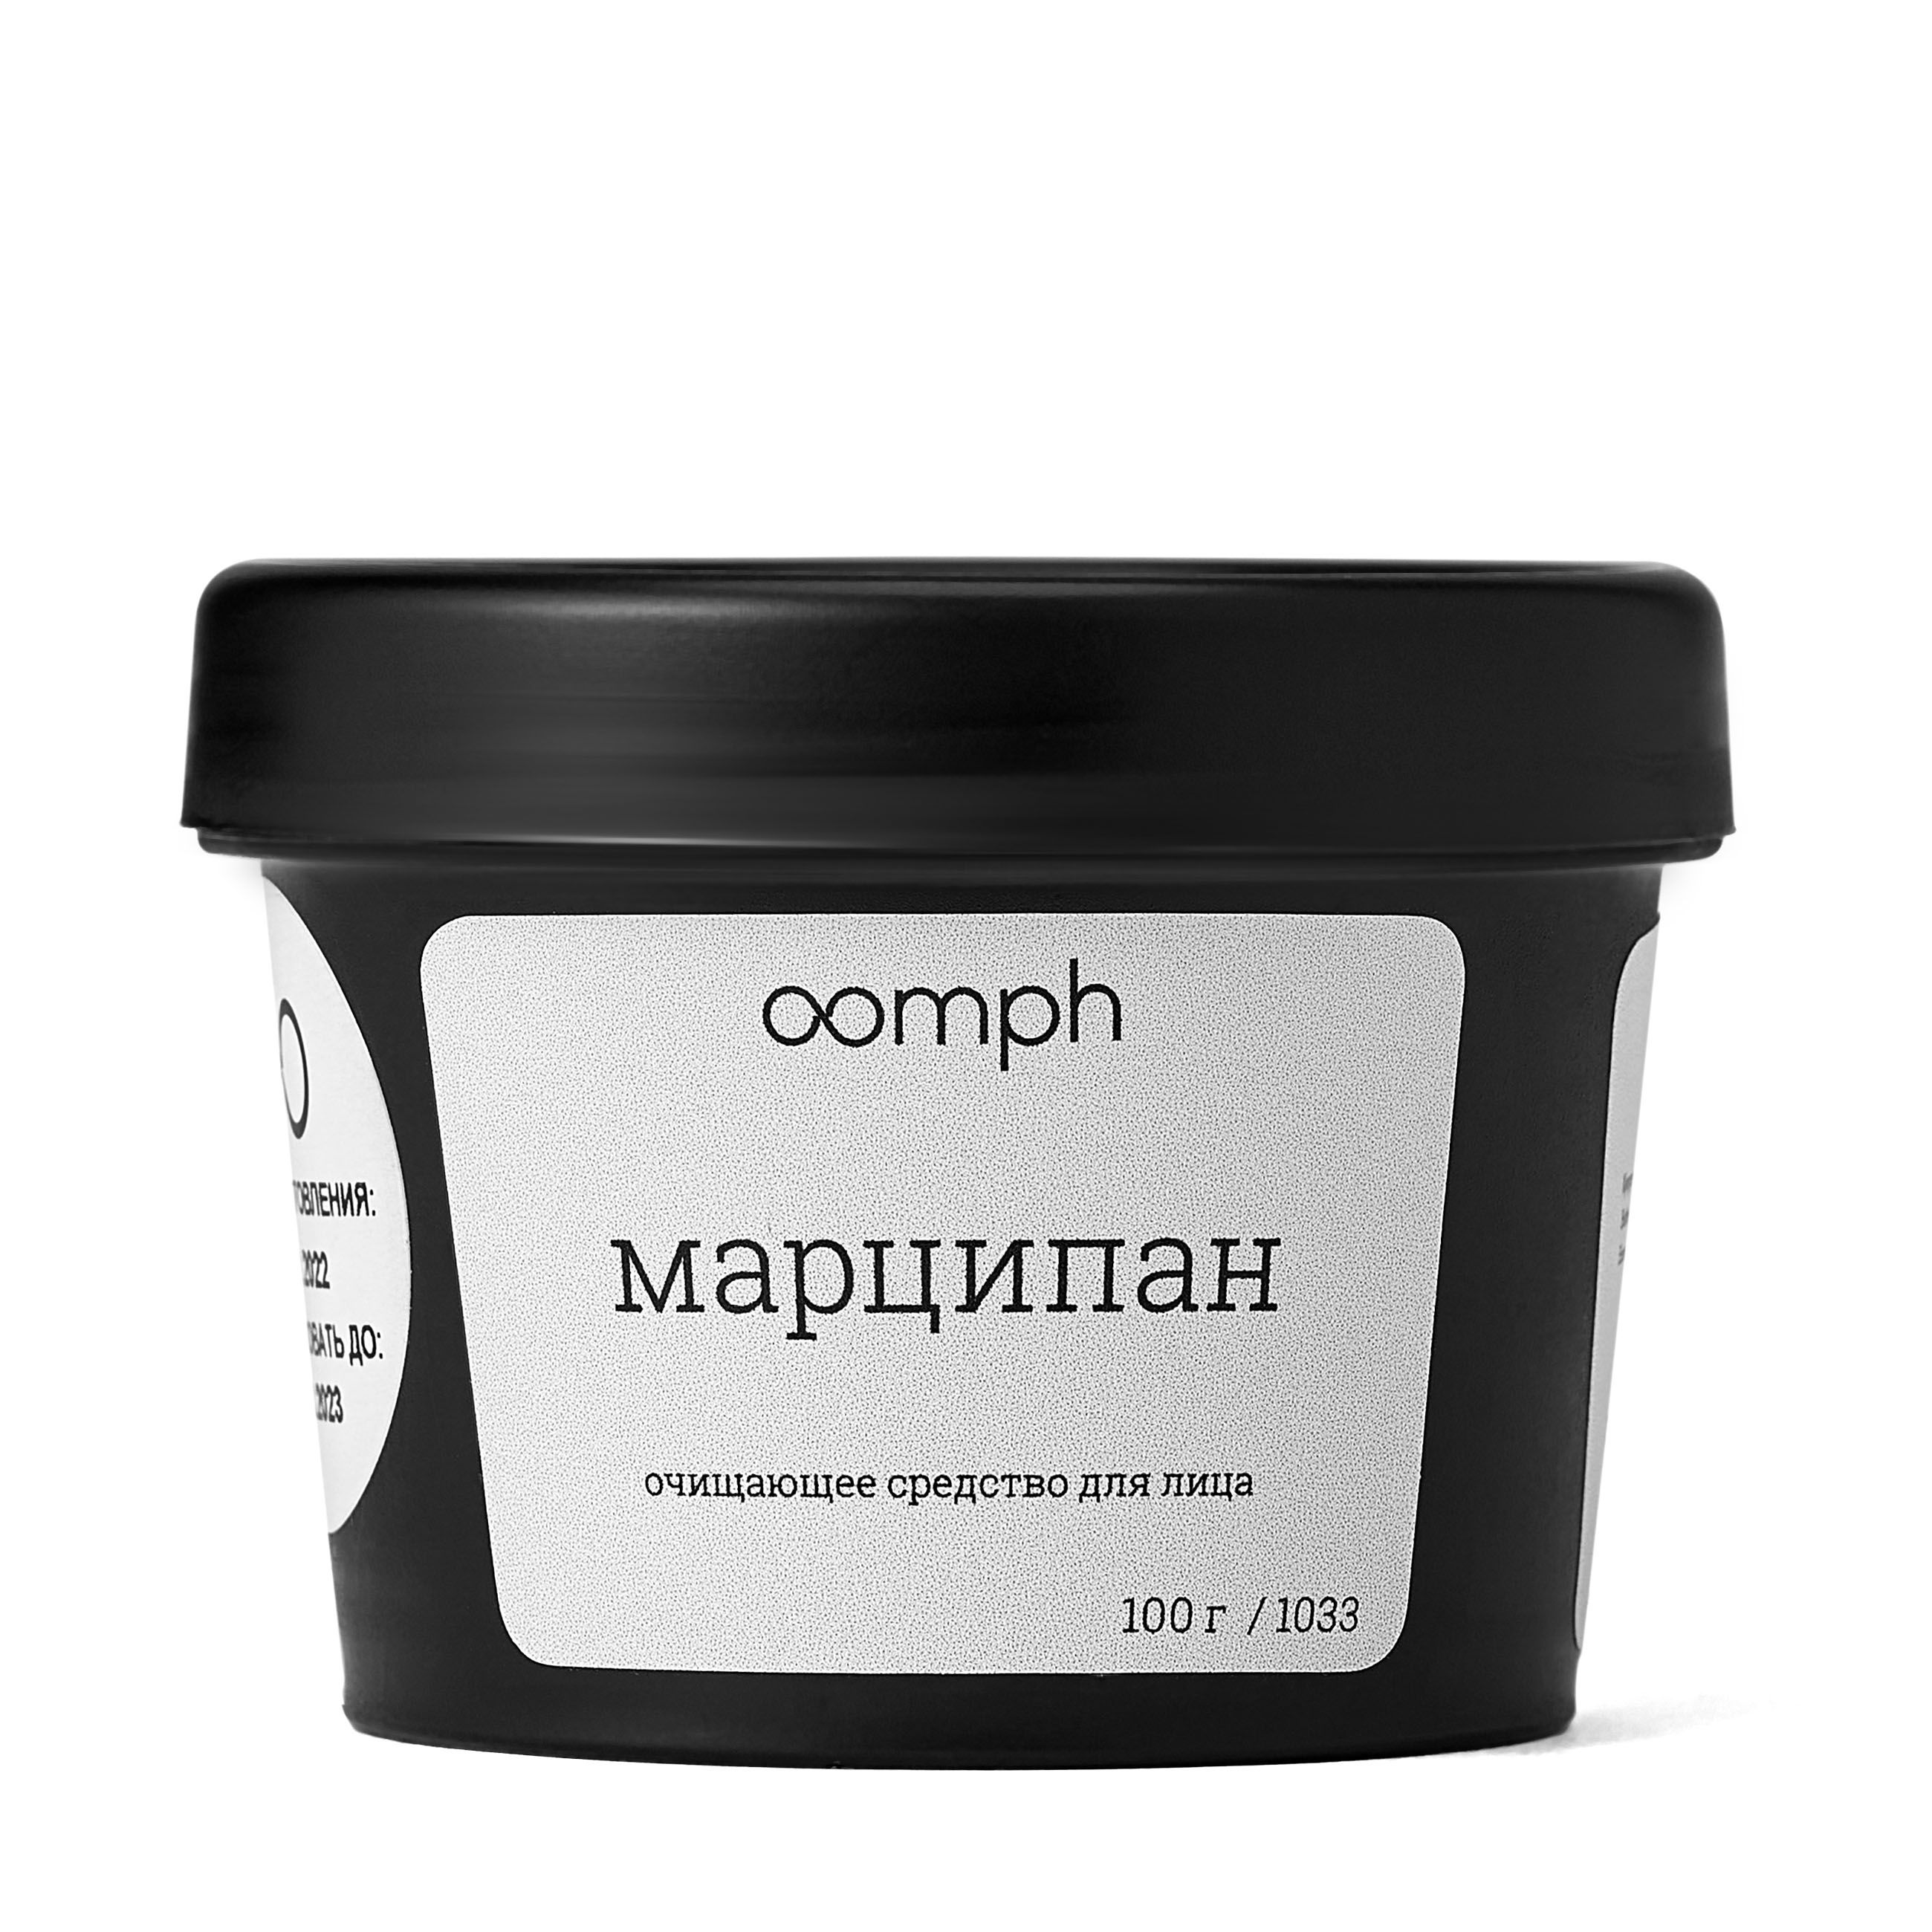 фото Очищающее средство для лица oomph марципан 100г